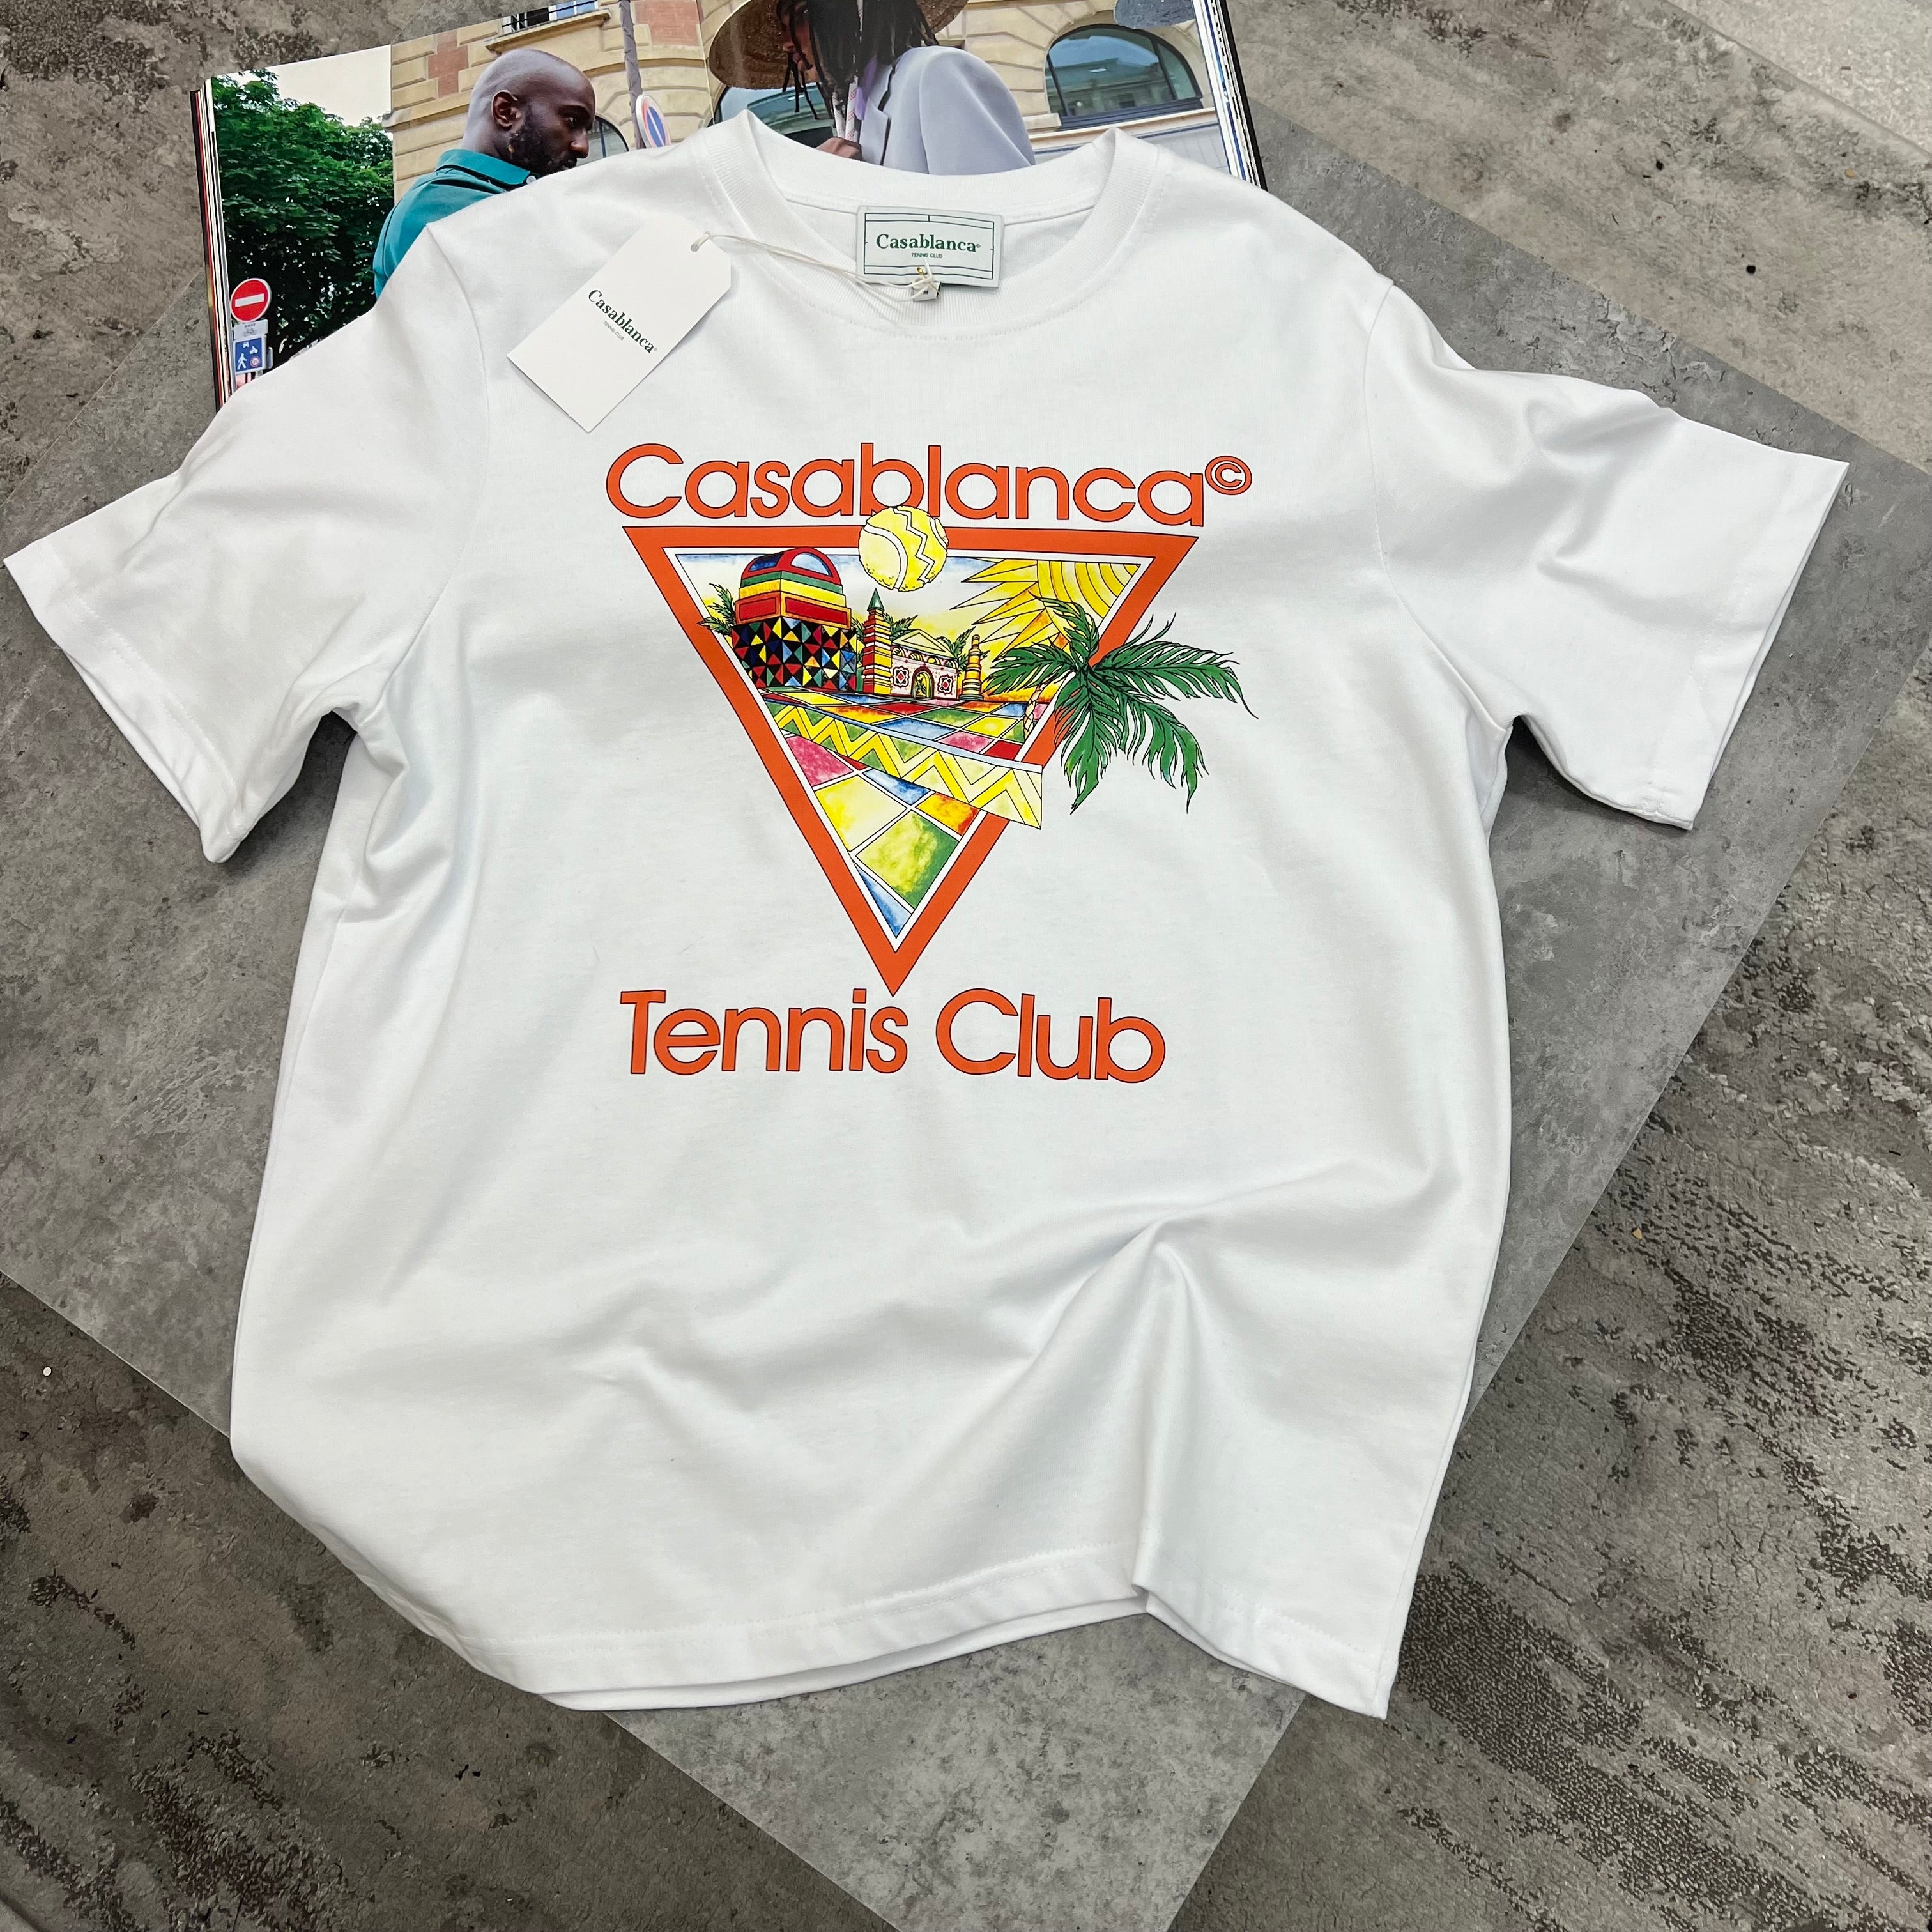 CASABLANCA - TENNIS CLUB T-SHIRT - WHITE/ORANGE